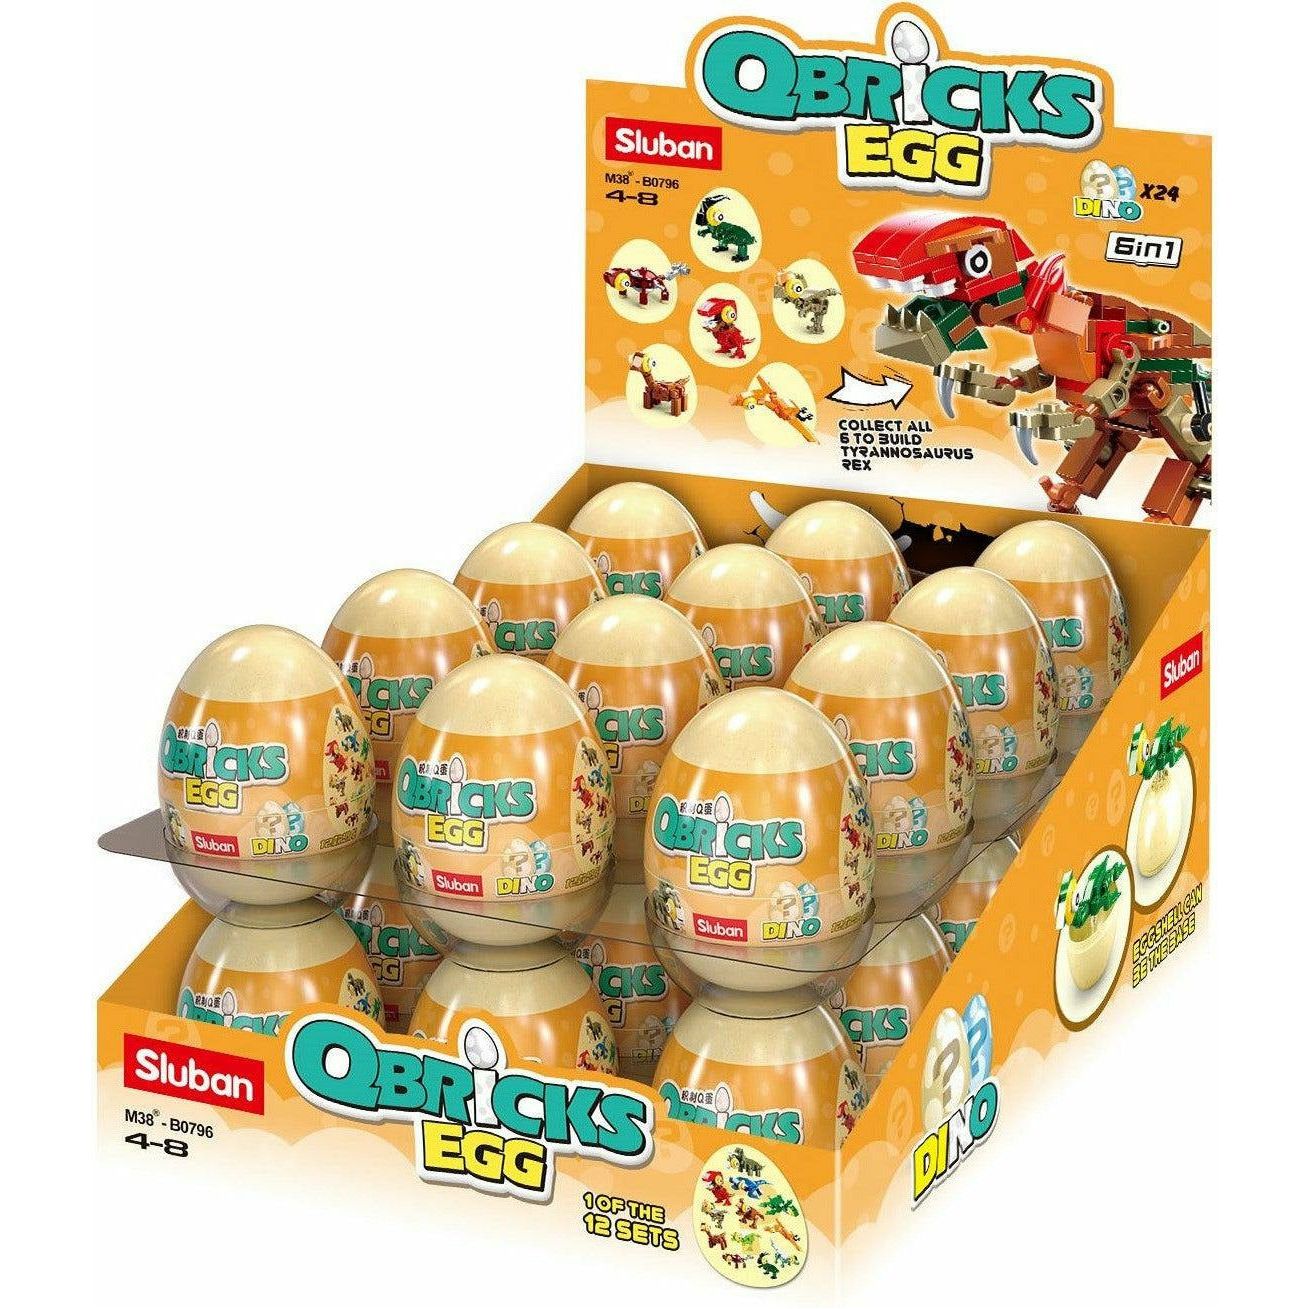 Qbricks Egg Dino - 1 Piece Assorted - Dollars and Sense